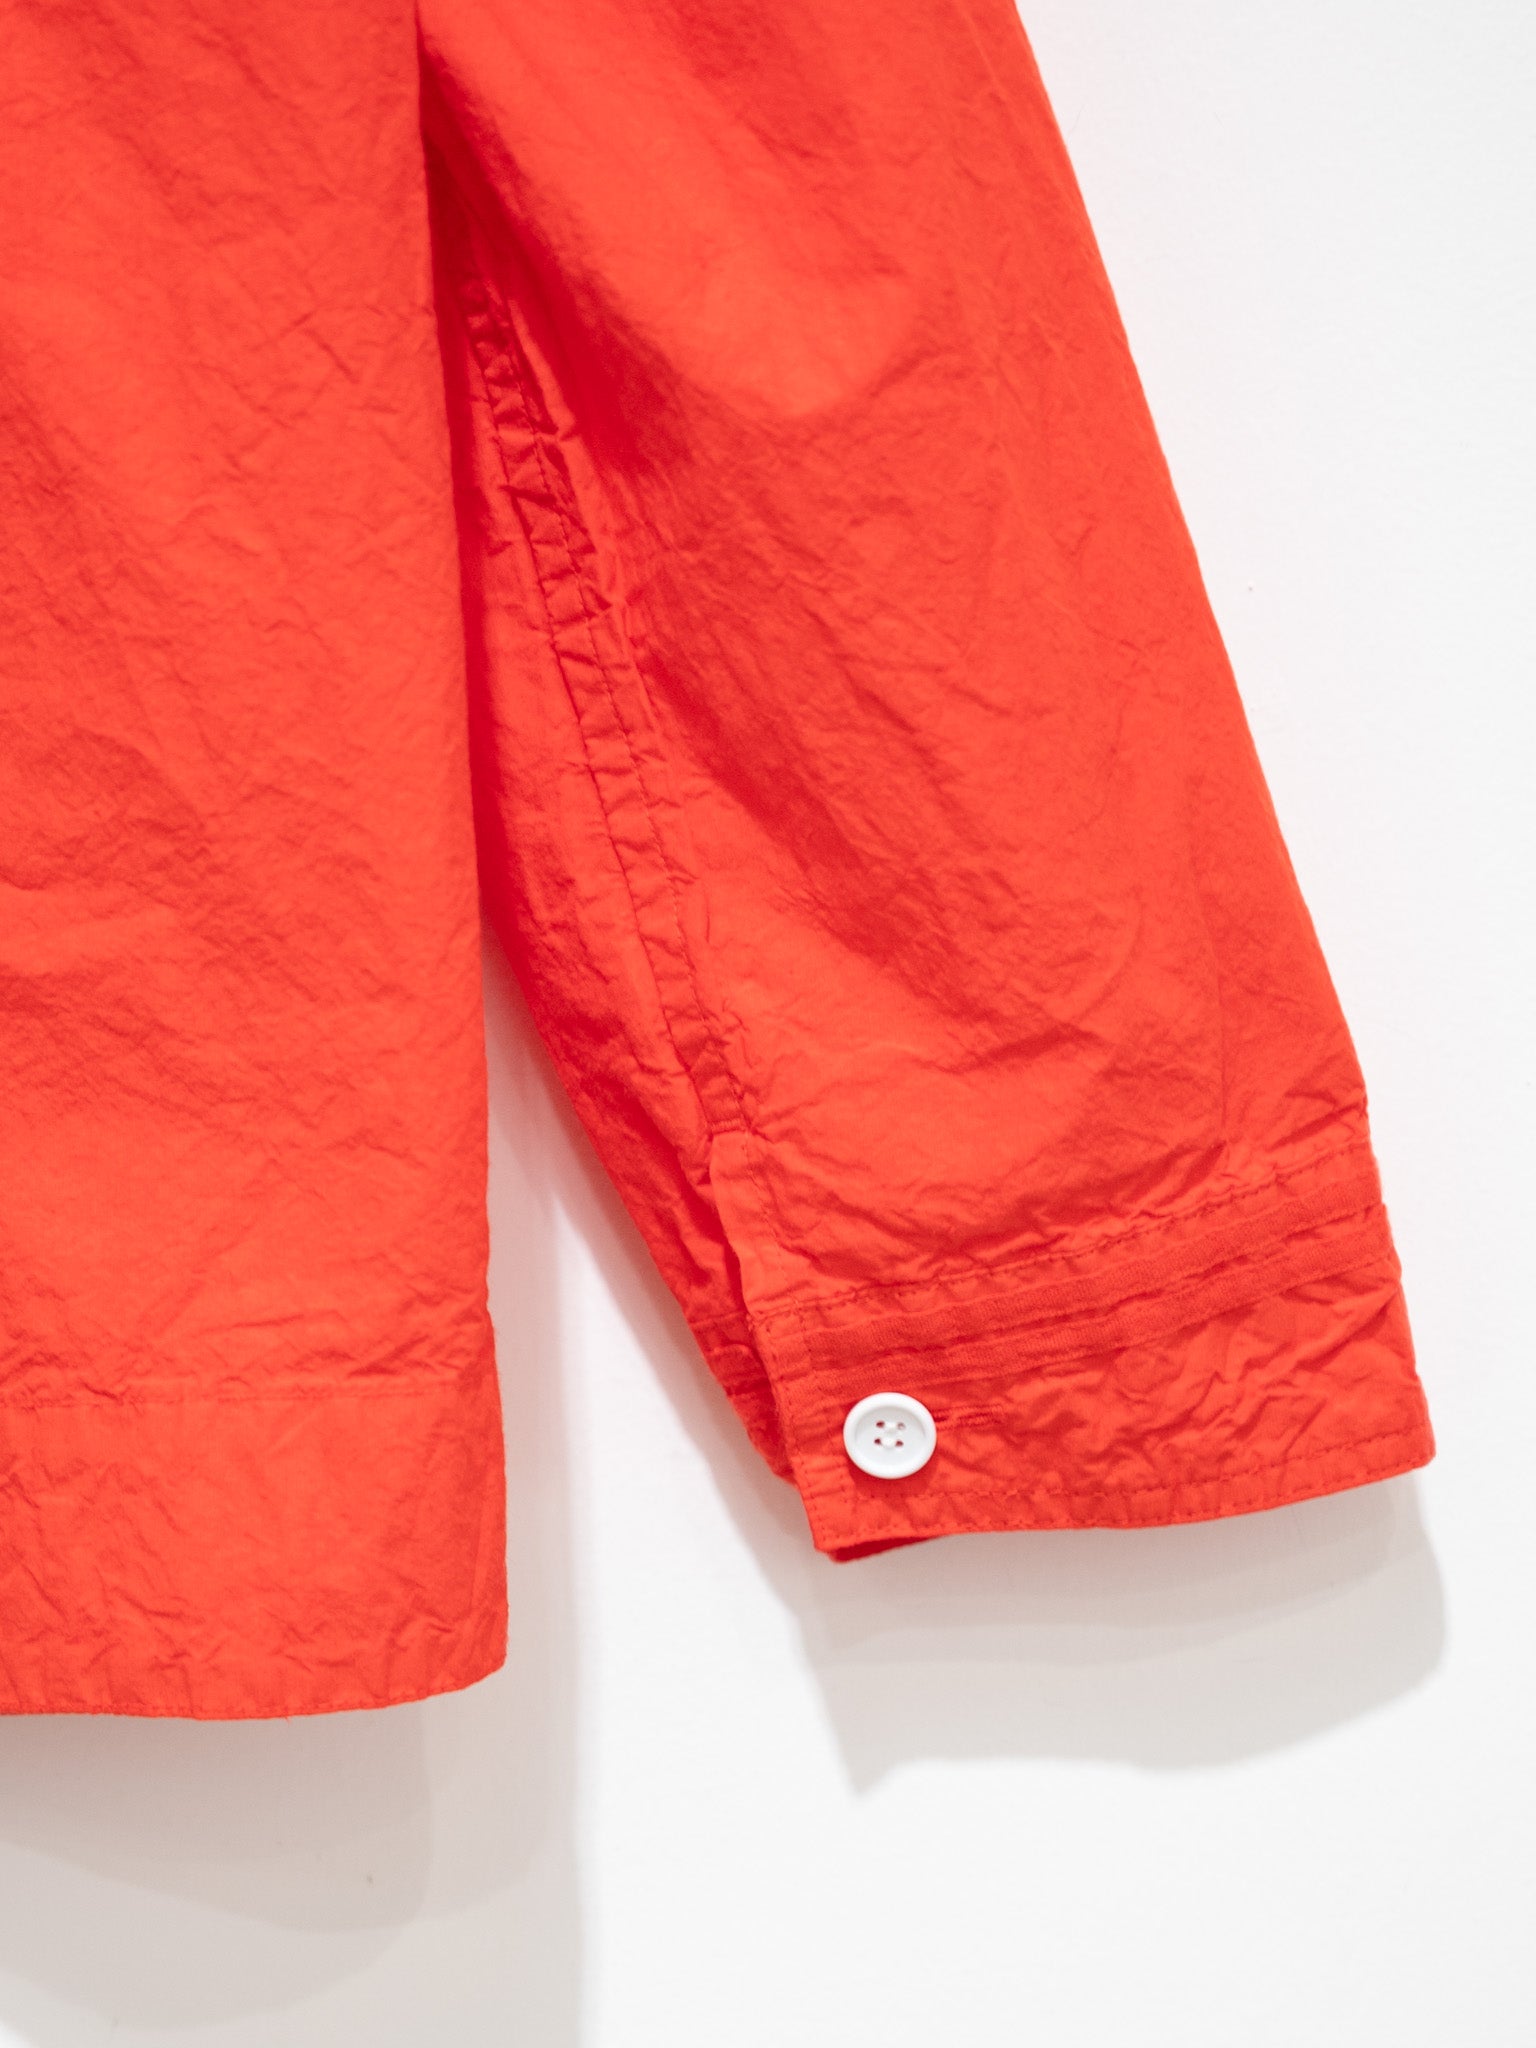 Namu Shop - Veritecoeur Shrink Sailor Collar Shirt - Red Orange